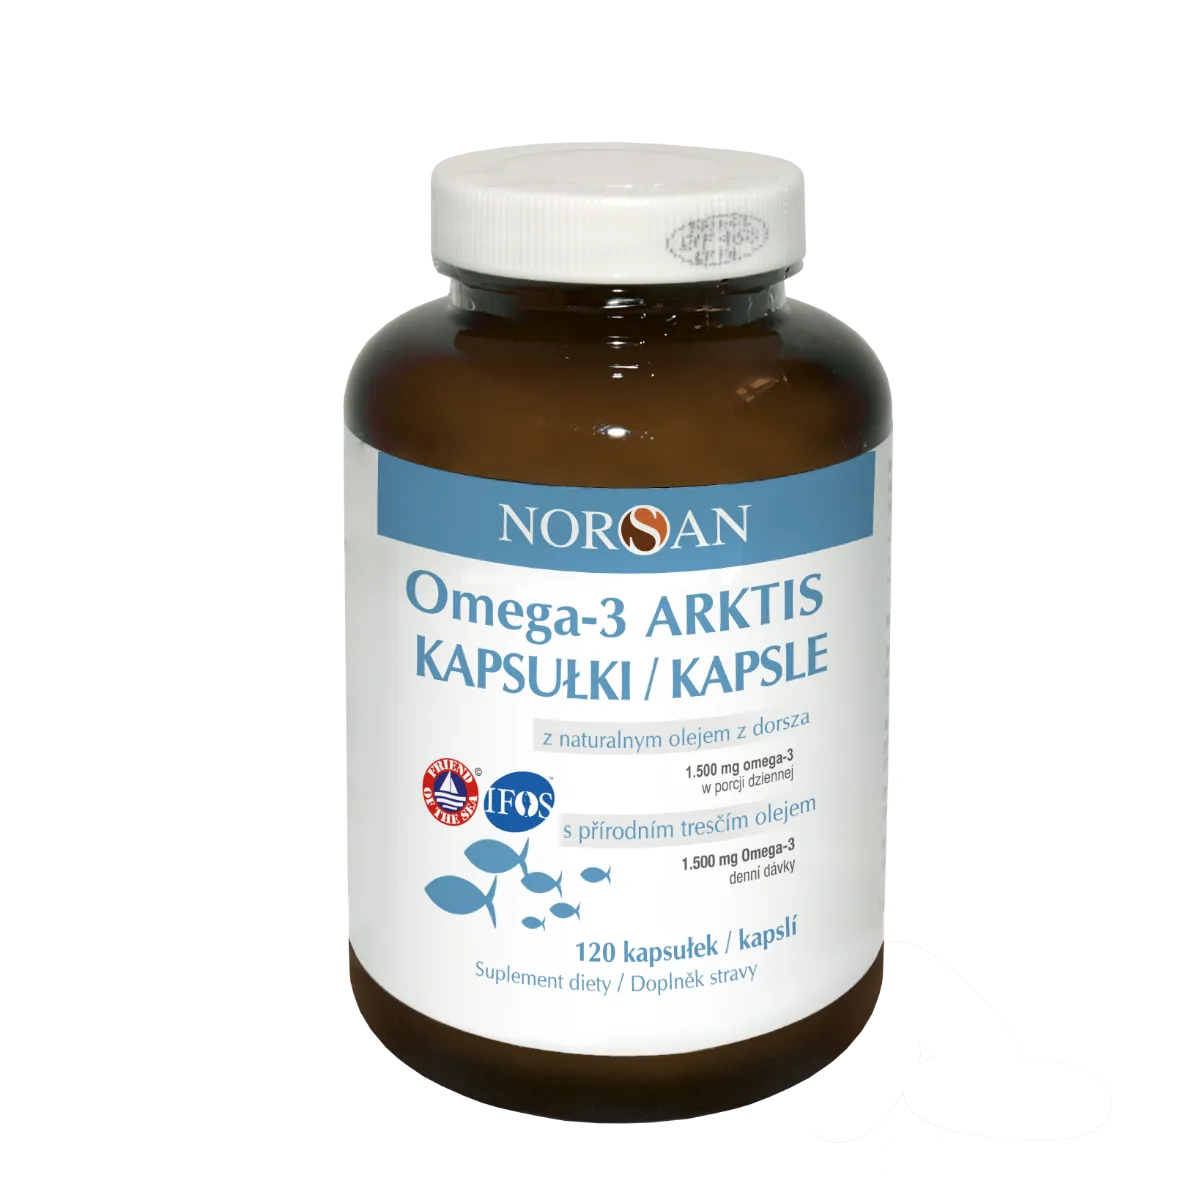 Norsan Omega-3 Artkis kapsułki z naturalnym olejem z dorsza arktycznego i ekstraktem z rozmarynu, 120 kapsułek 